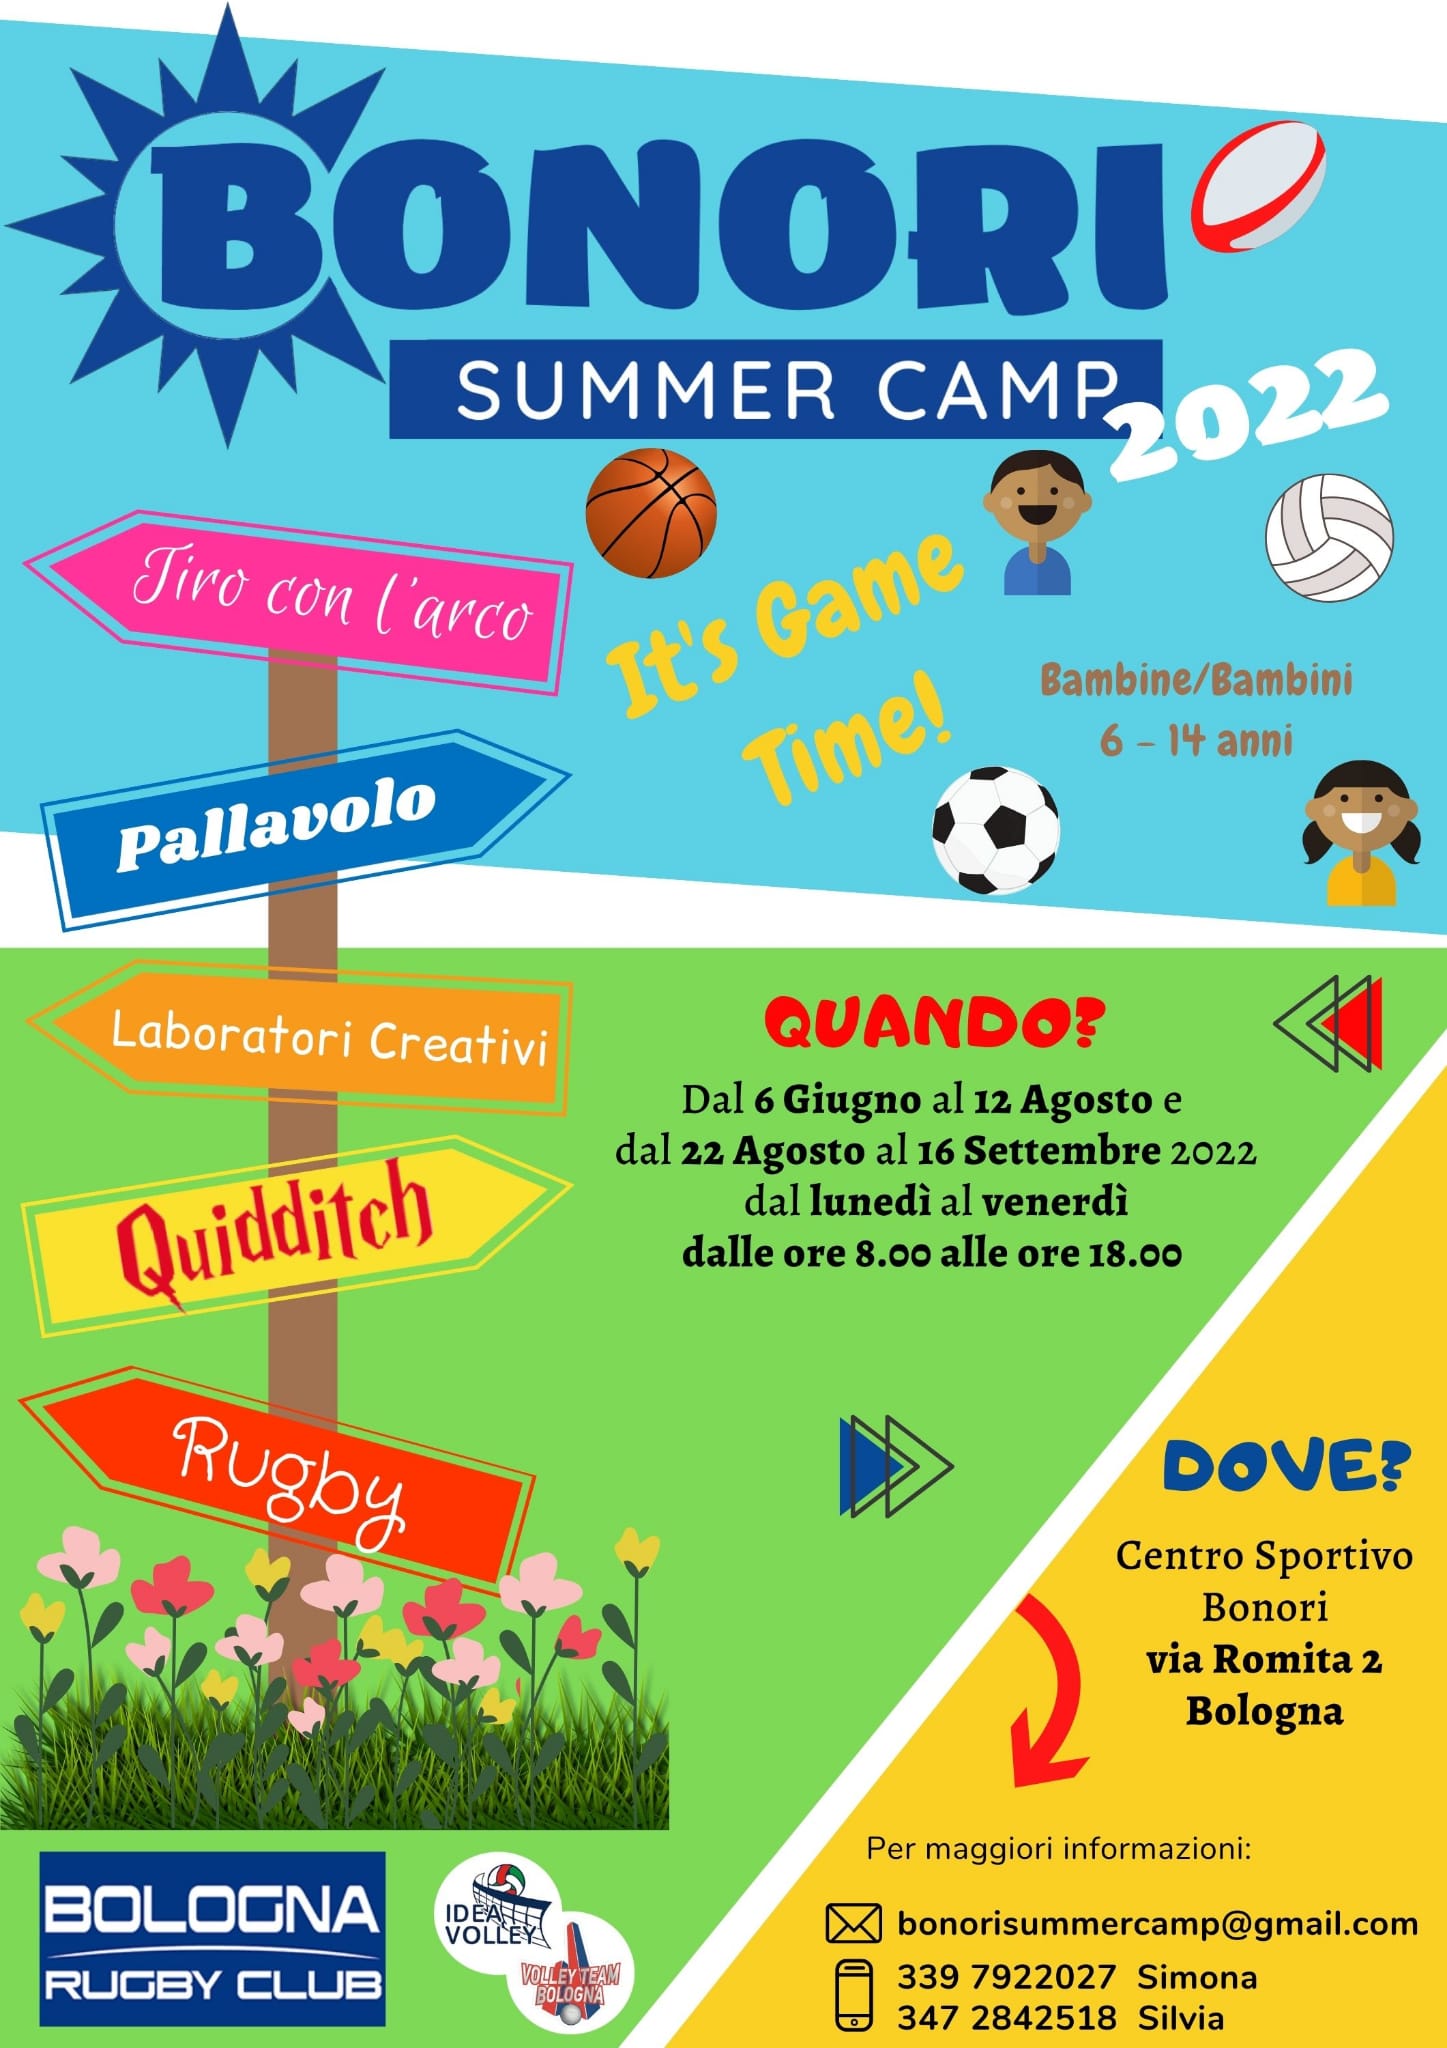 Bonori Summer Camp 2022